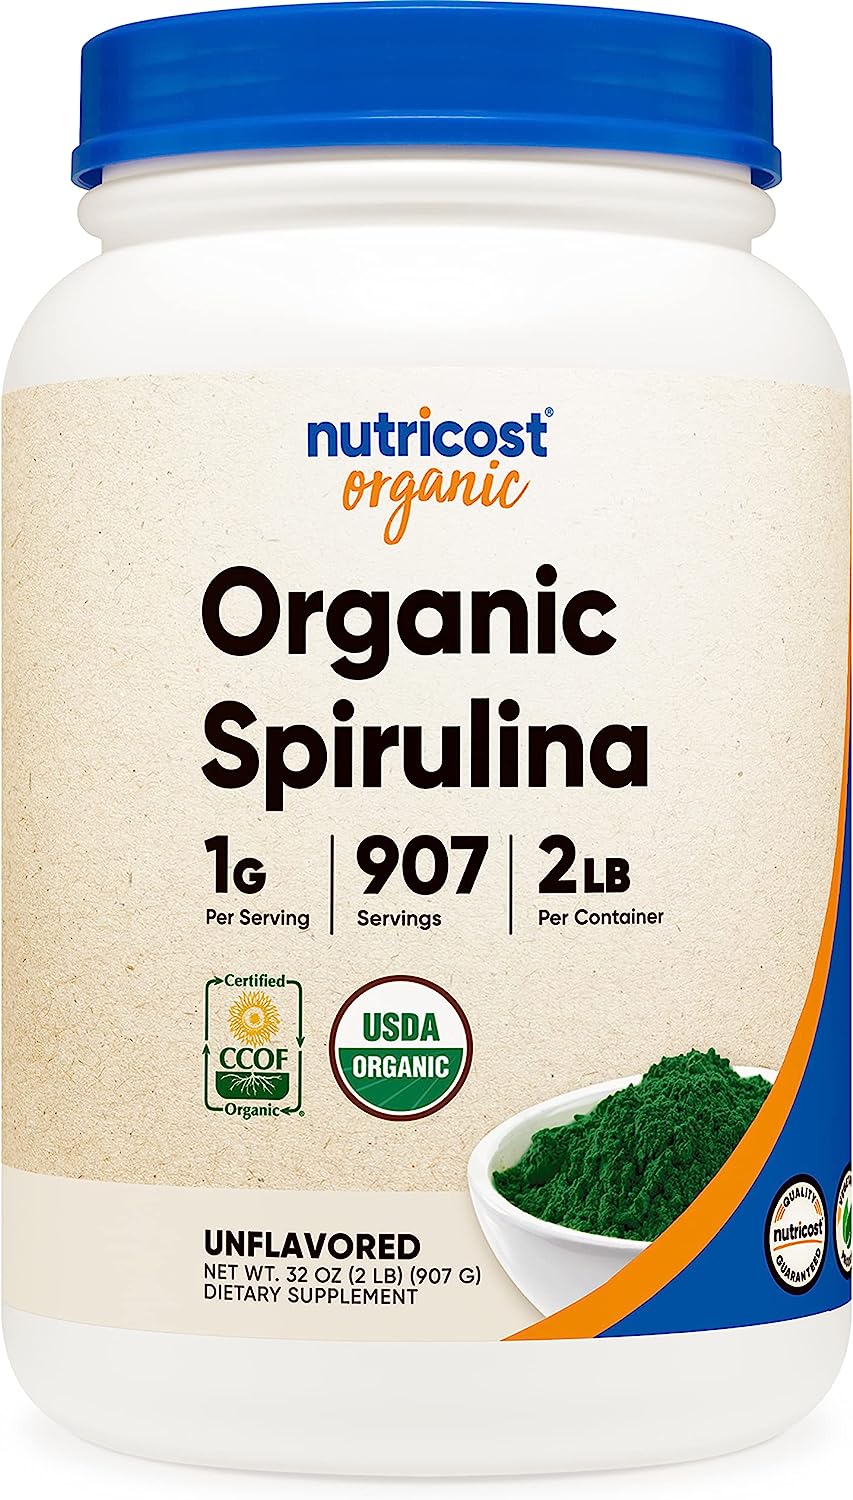 Nutricost Organic Spirulina Powder 2  - Pure, Certified Organic Spirulina